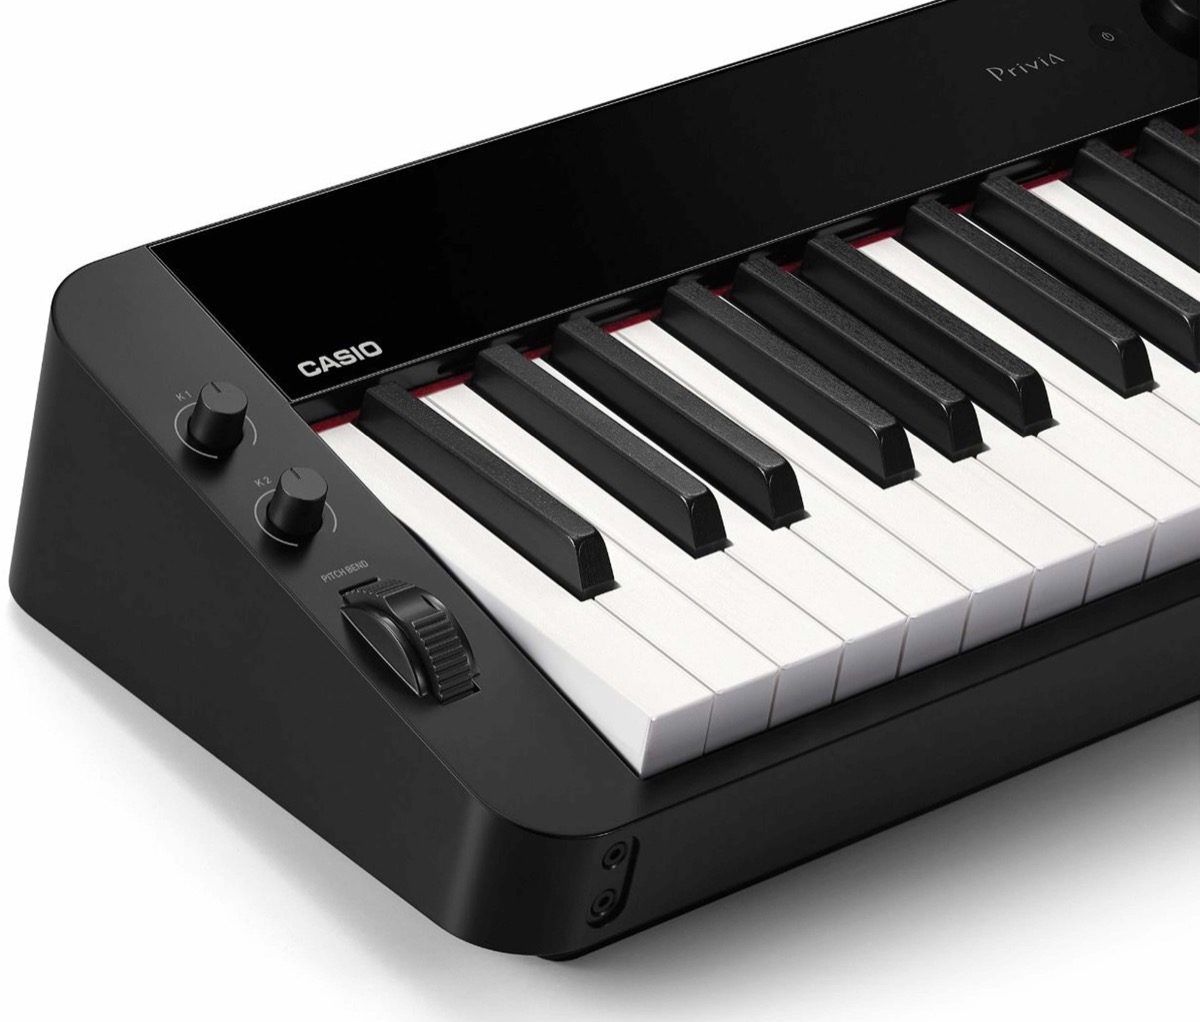 Casio PX-S3000 Privia Digital Stage Piano, 88-Key | zZounds